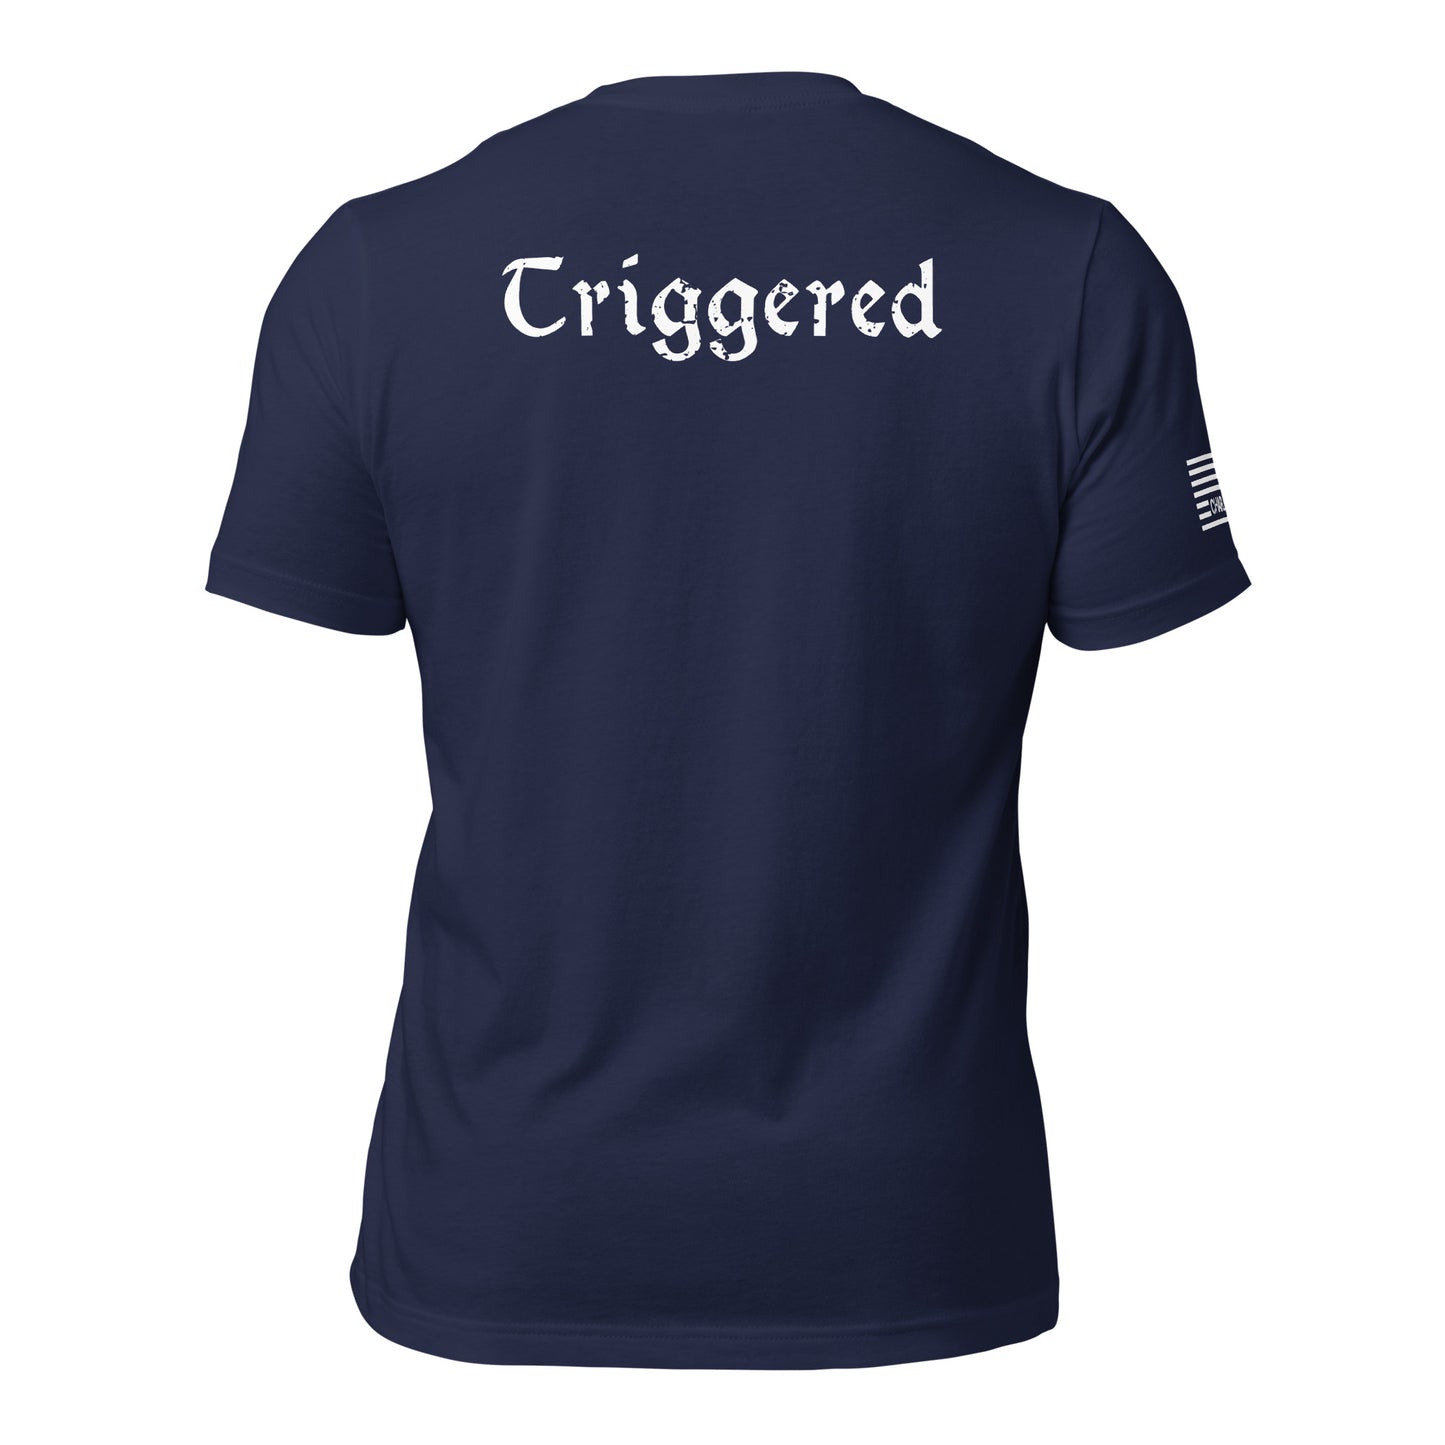 Triggered Unisex T-shirt